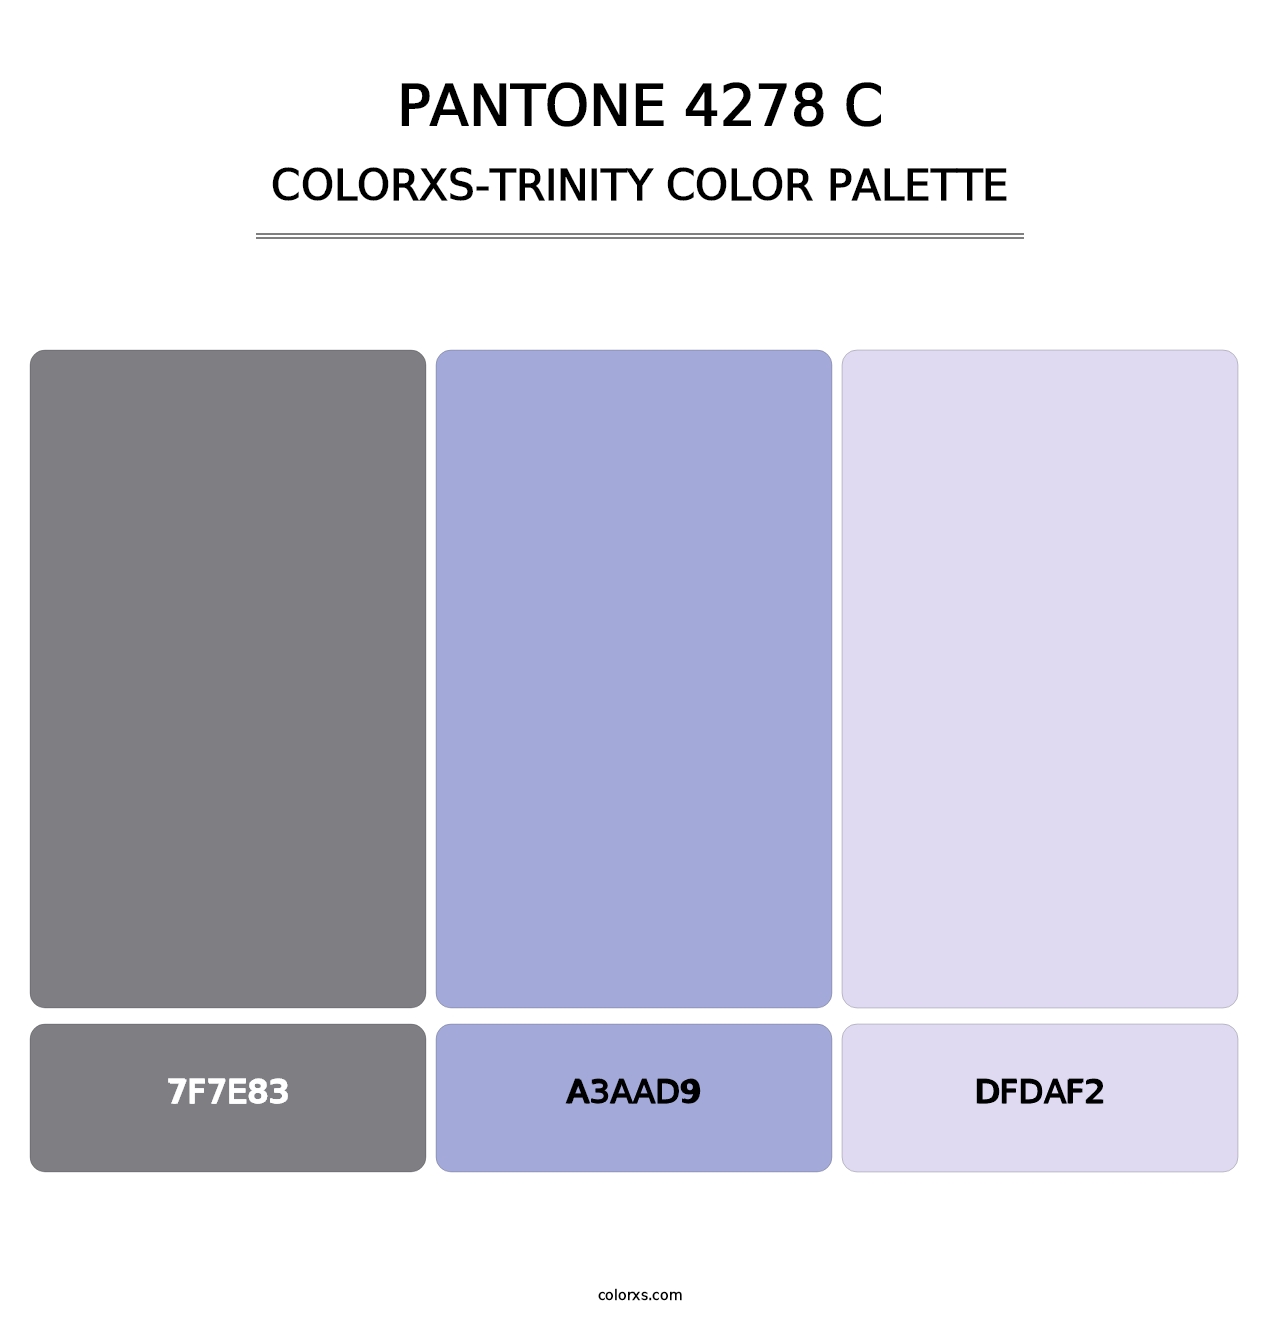 PANTONE 4278 C - Colorxs Trinity Palette